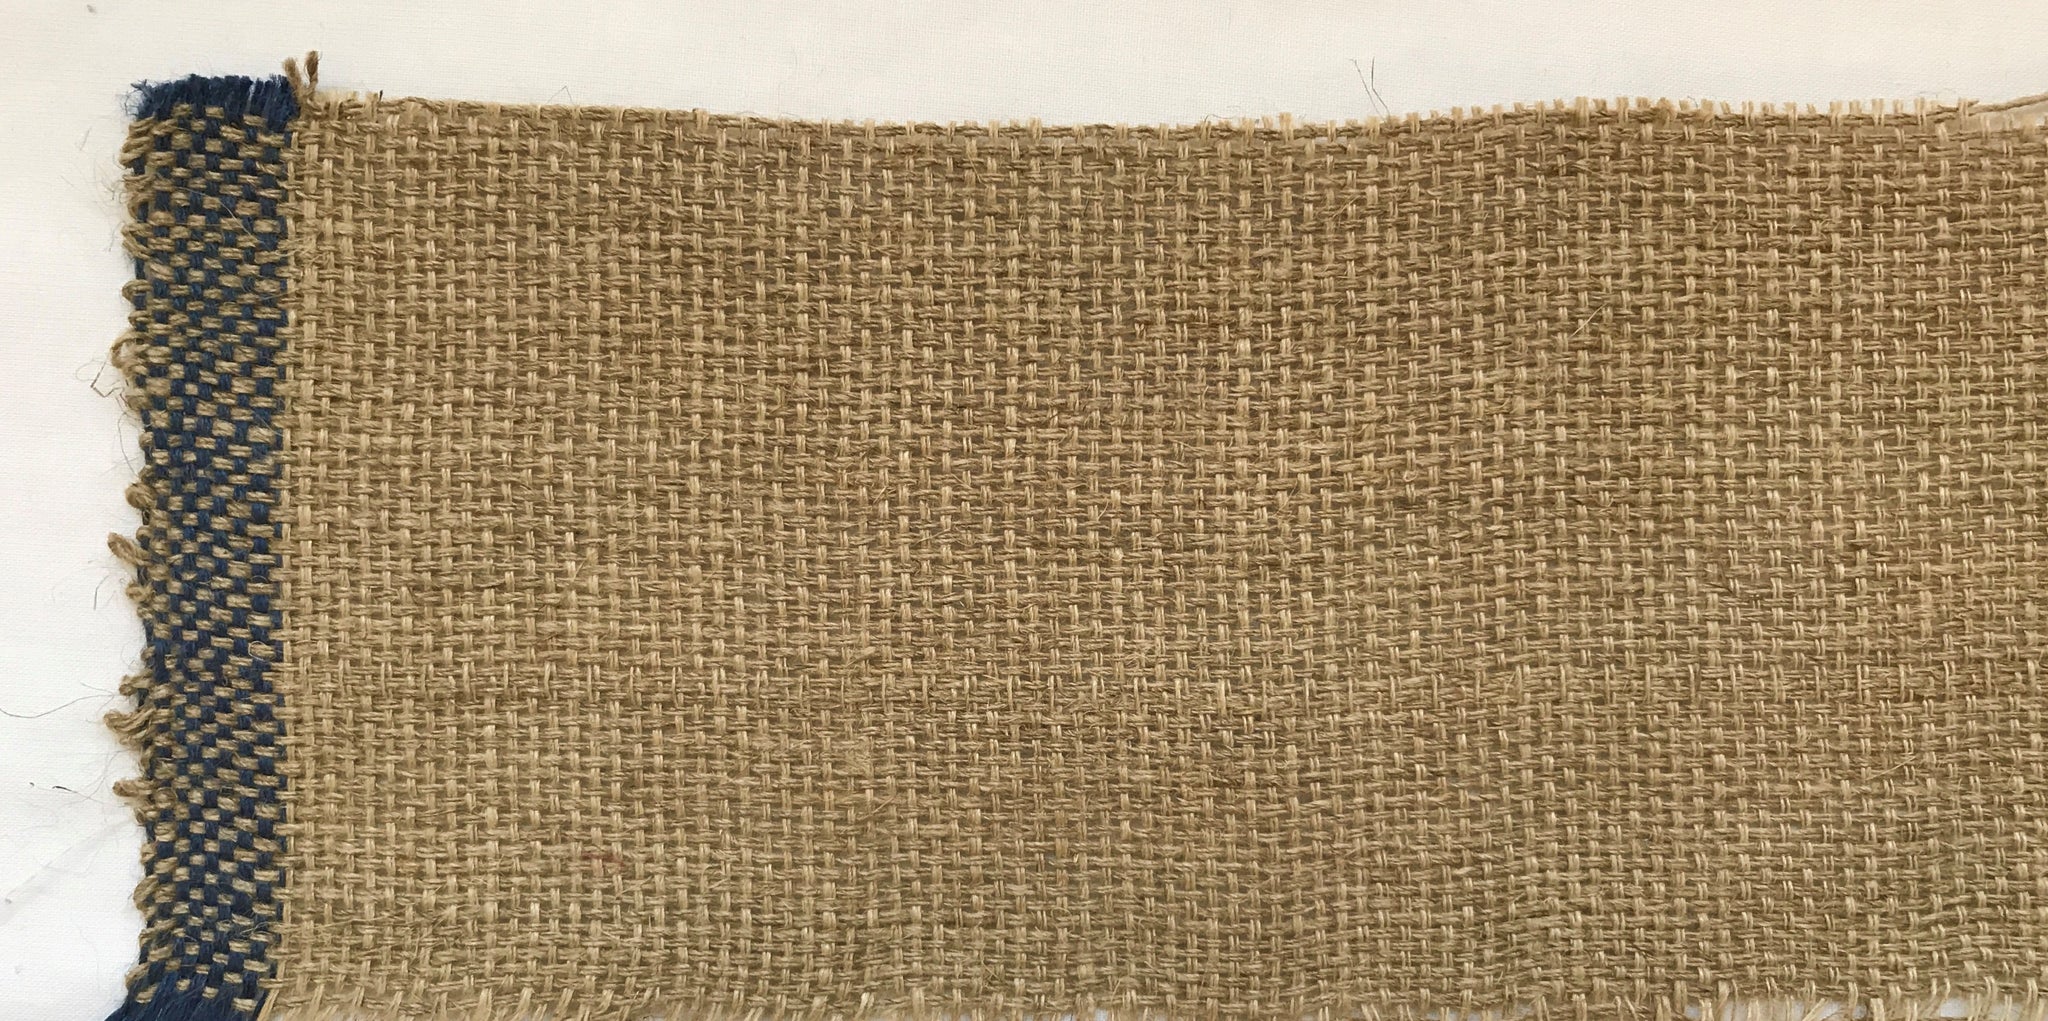 Handwoven Oatmeal flax weave